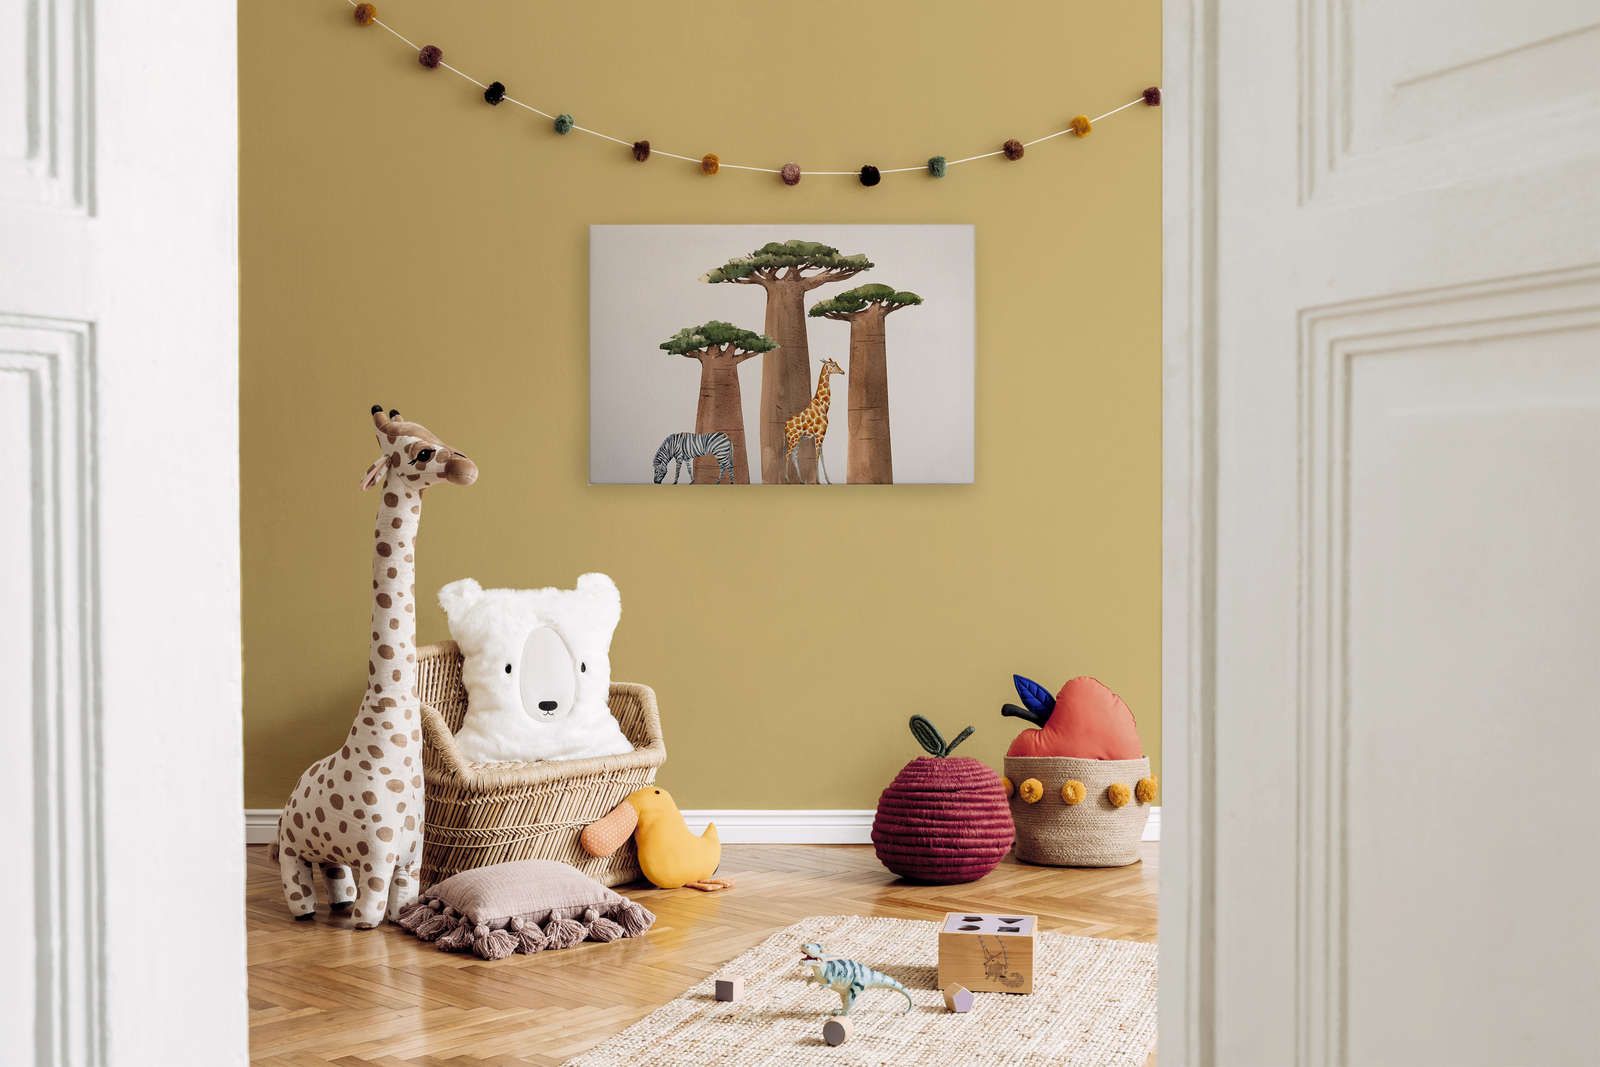             Toile Savane avec girafe et zèbre - 90 cm x 60 cm
        